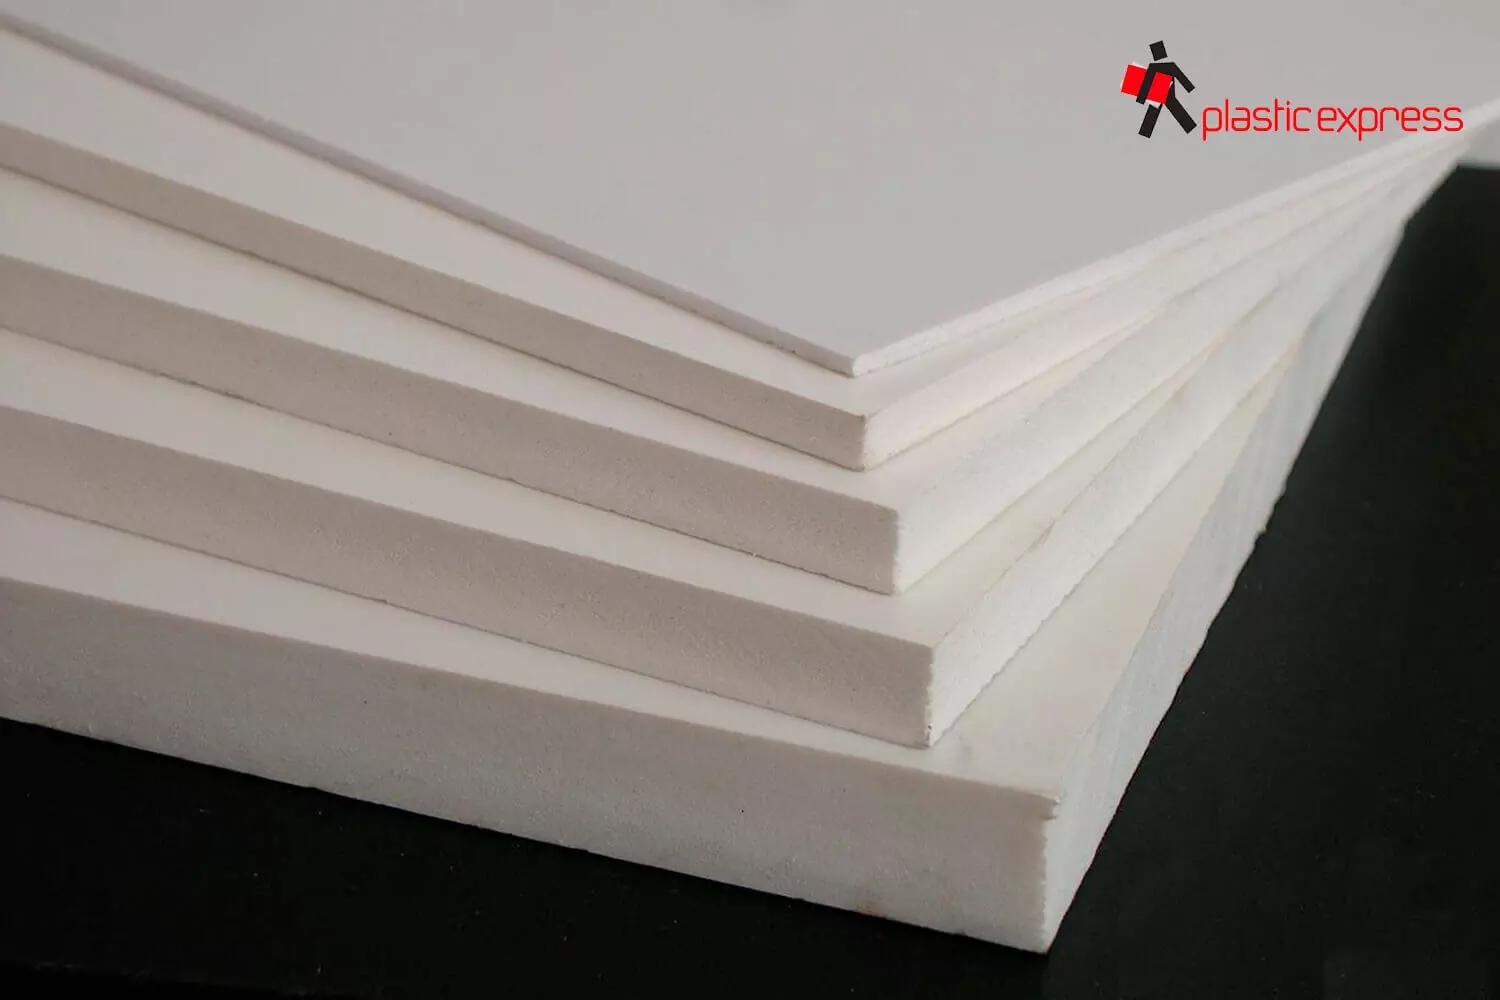 Insignia niebla Familiar PVC Espumado Blanco | PlasticExpress